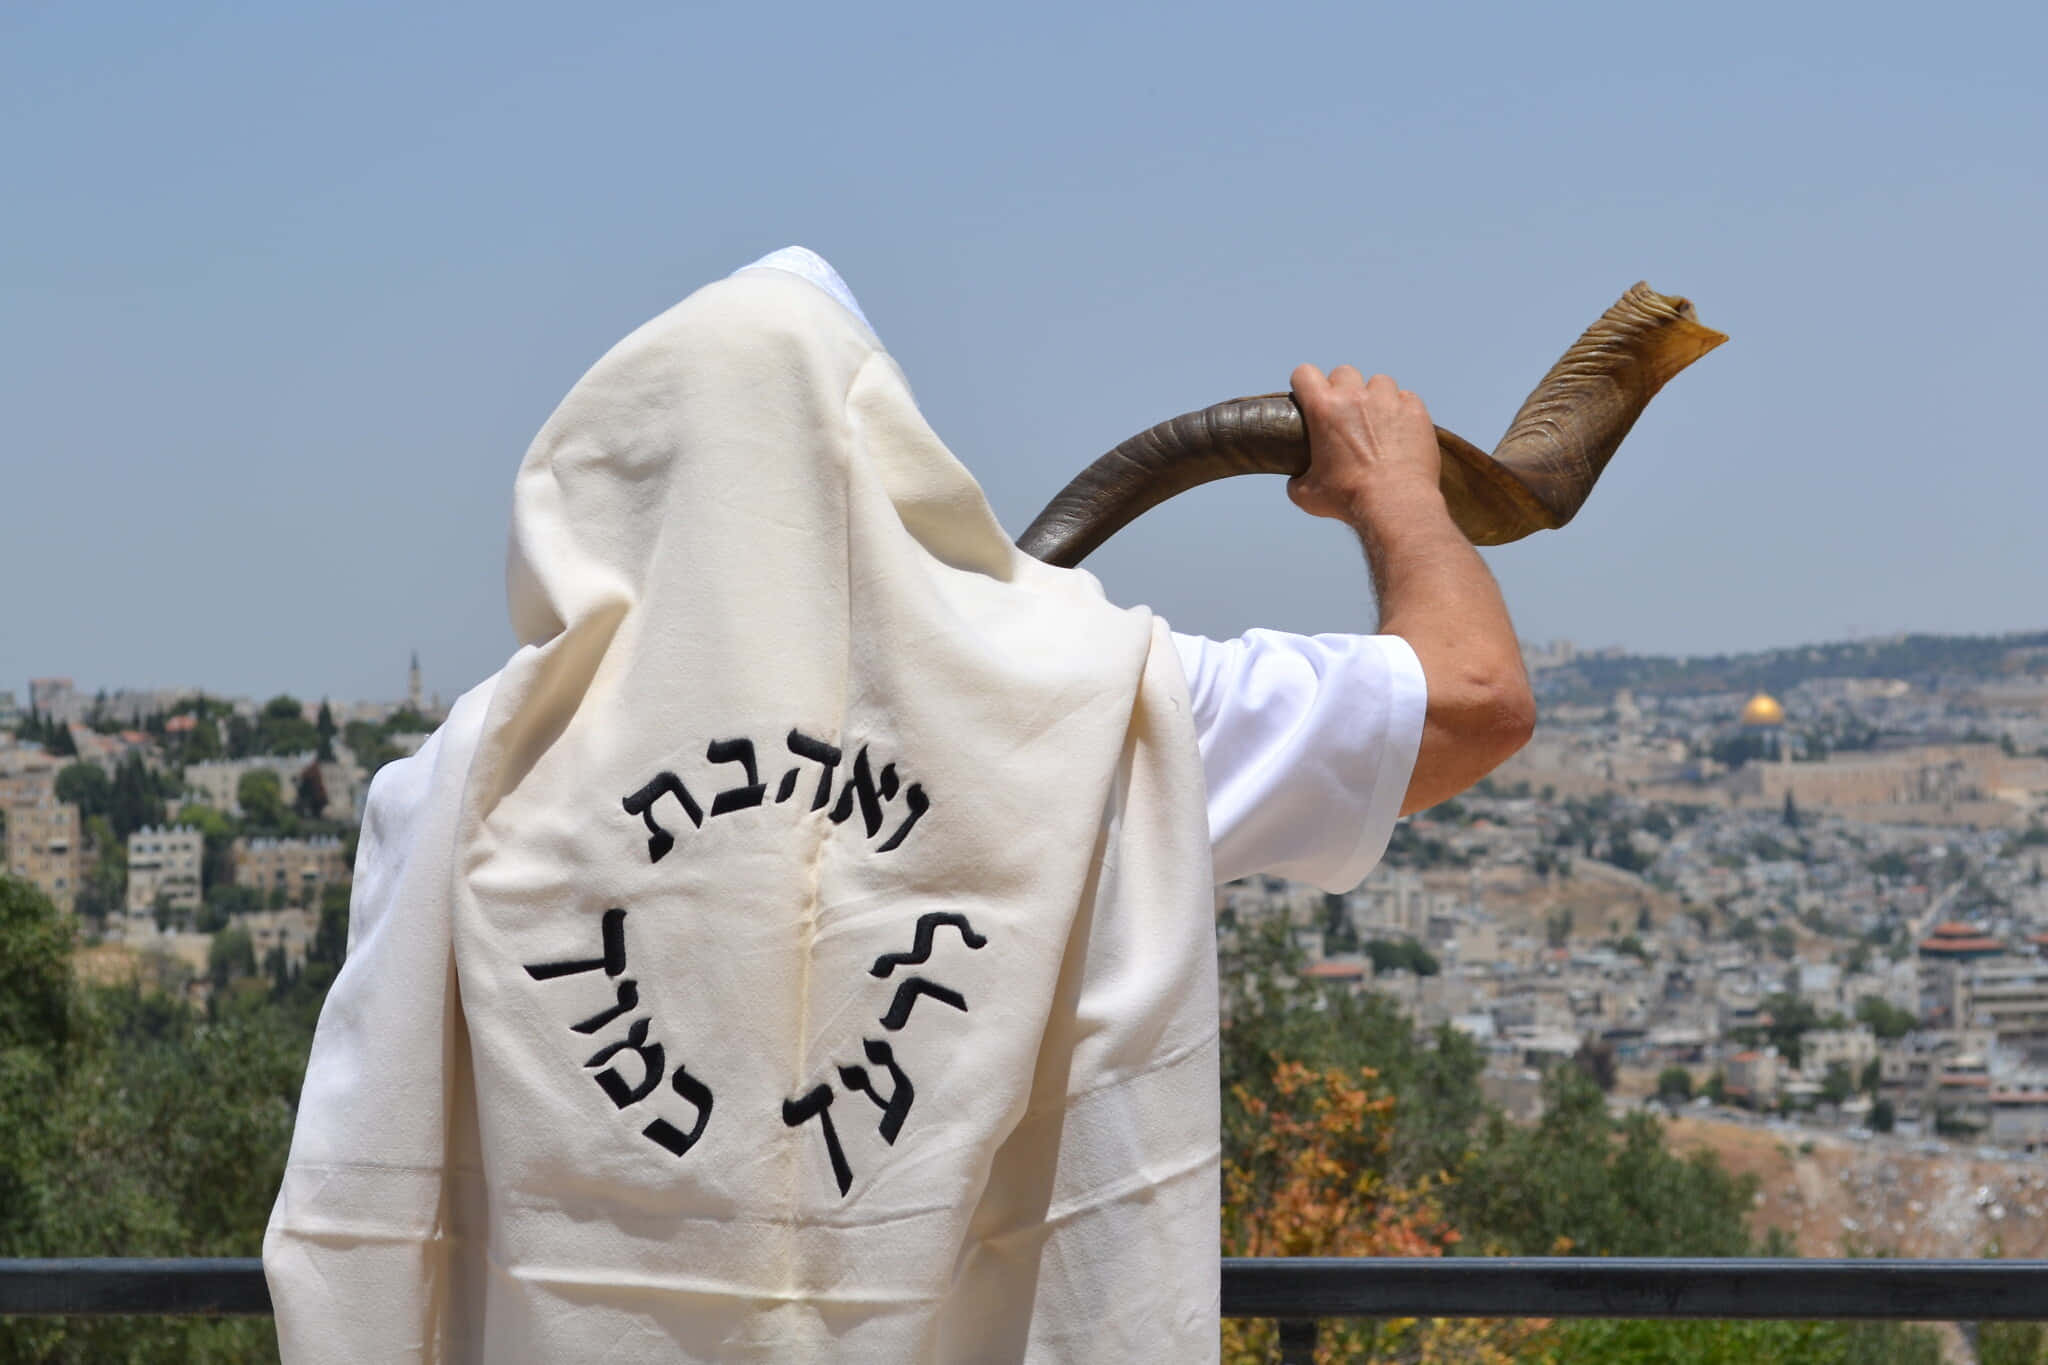 Caption: Celebrating Rosh Hashanah - Traditional Jewish New Year Wallpaper